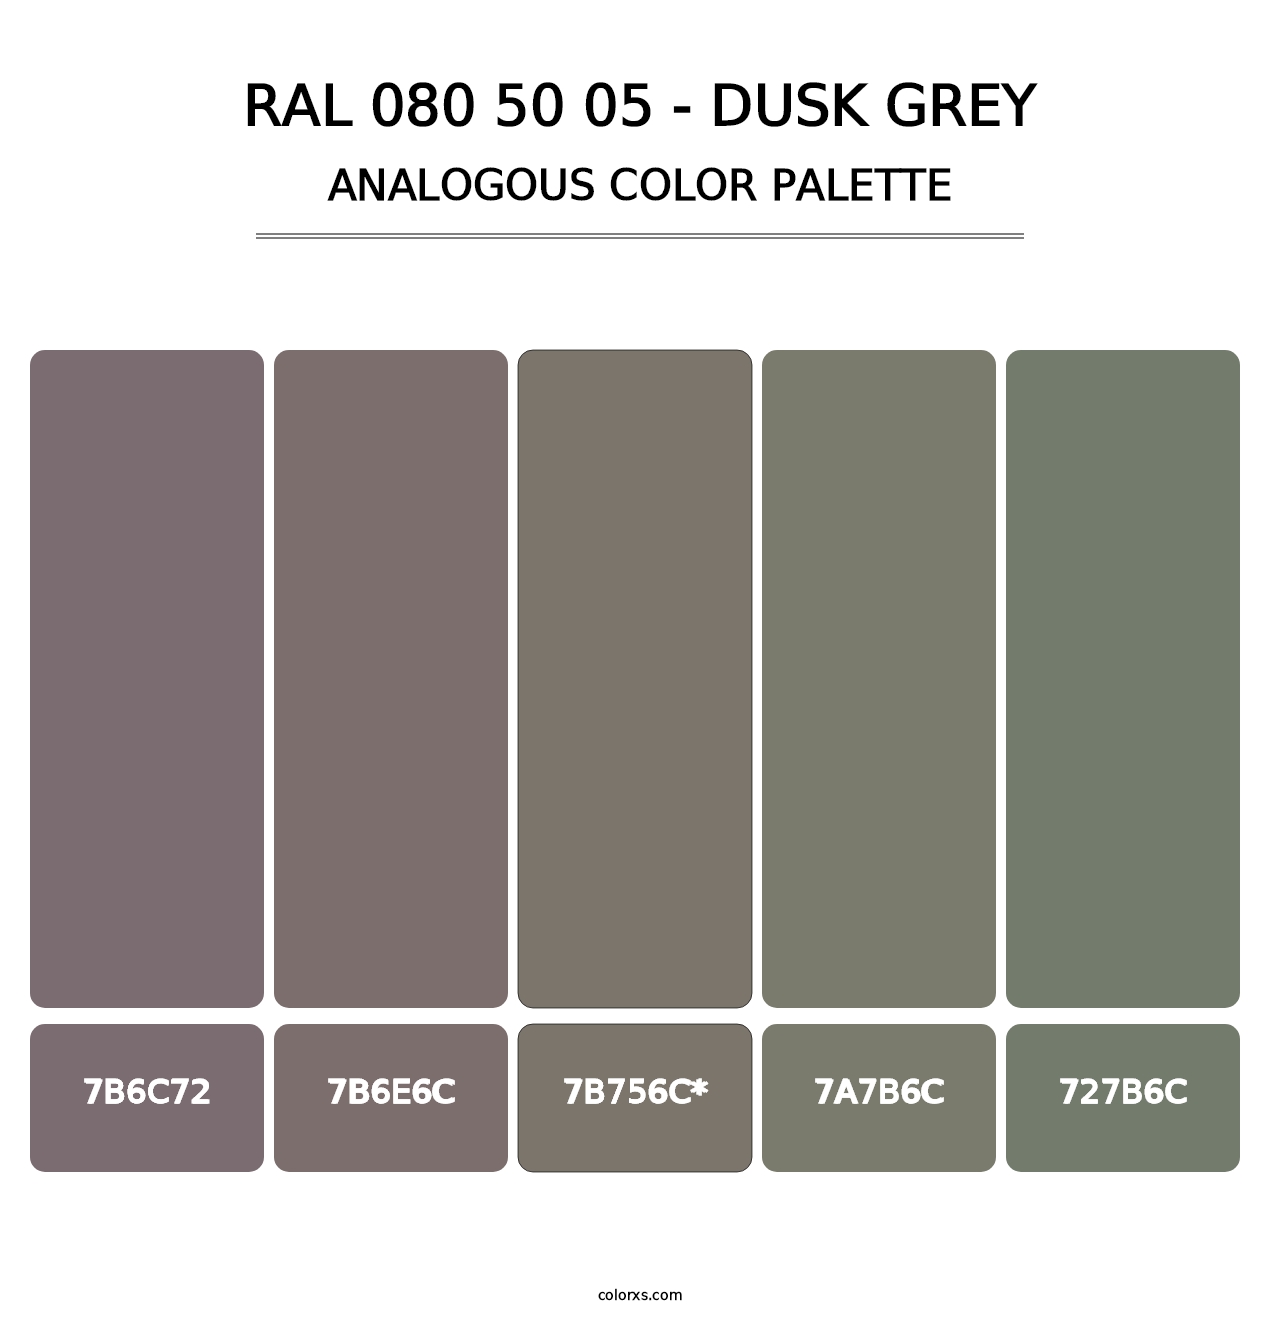 RAL 080 50 05 - Dusk Grey - Analogous Color Palette